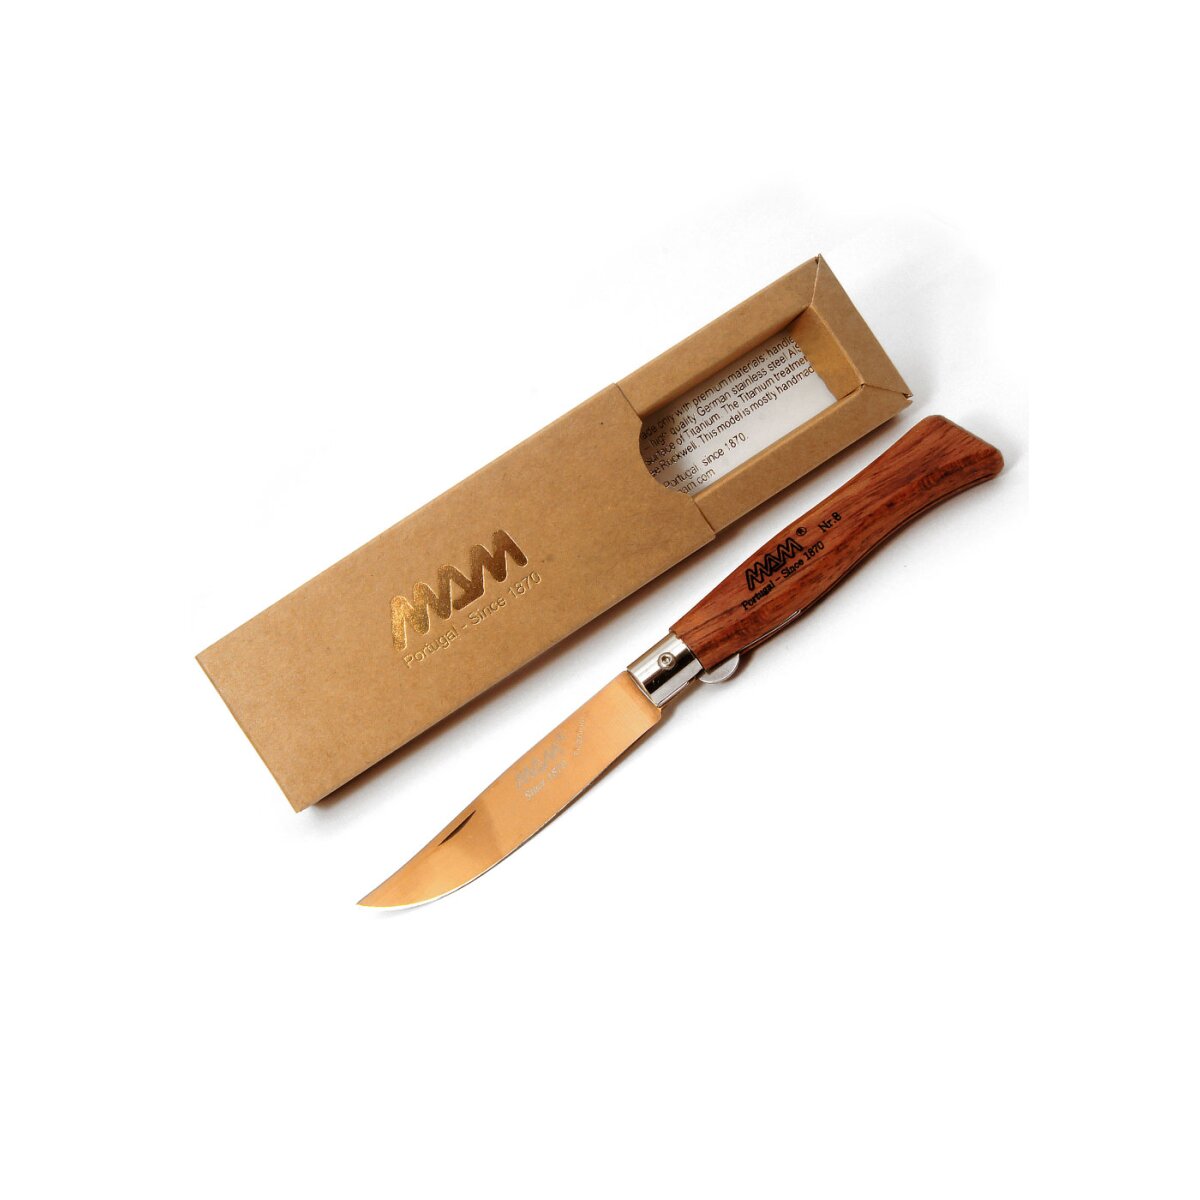 Douro pocket knife with bronze titanium blade